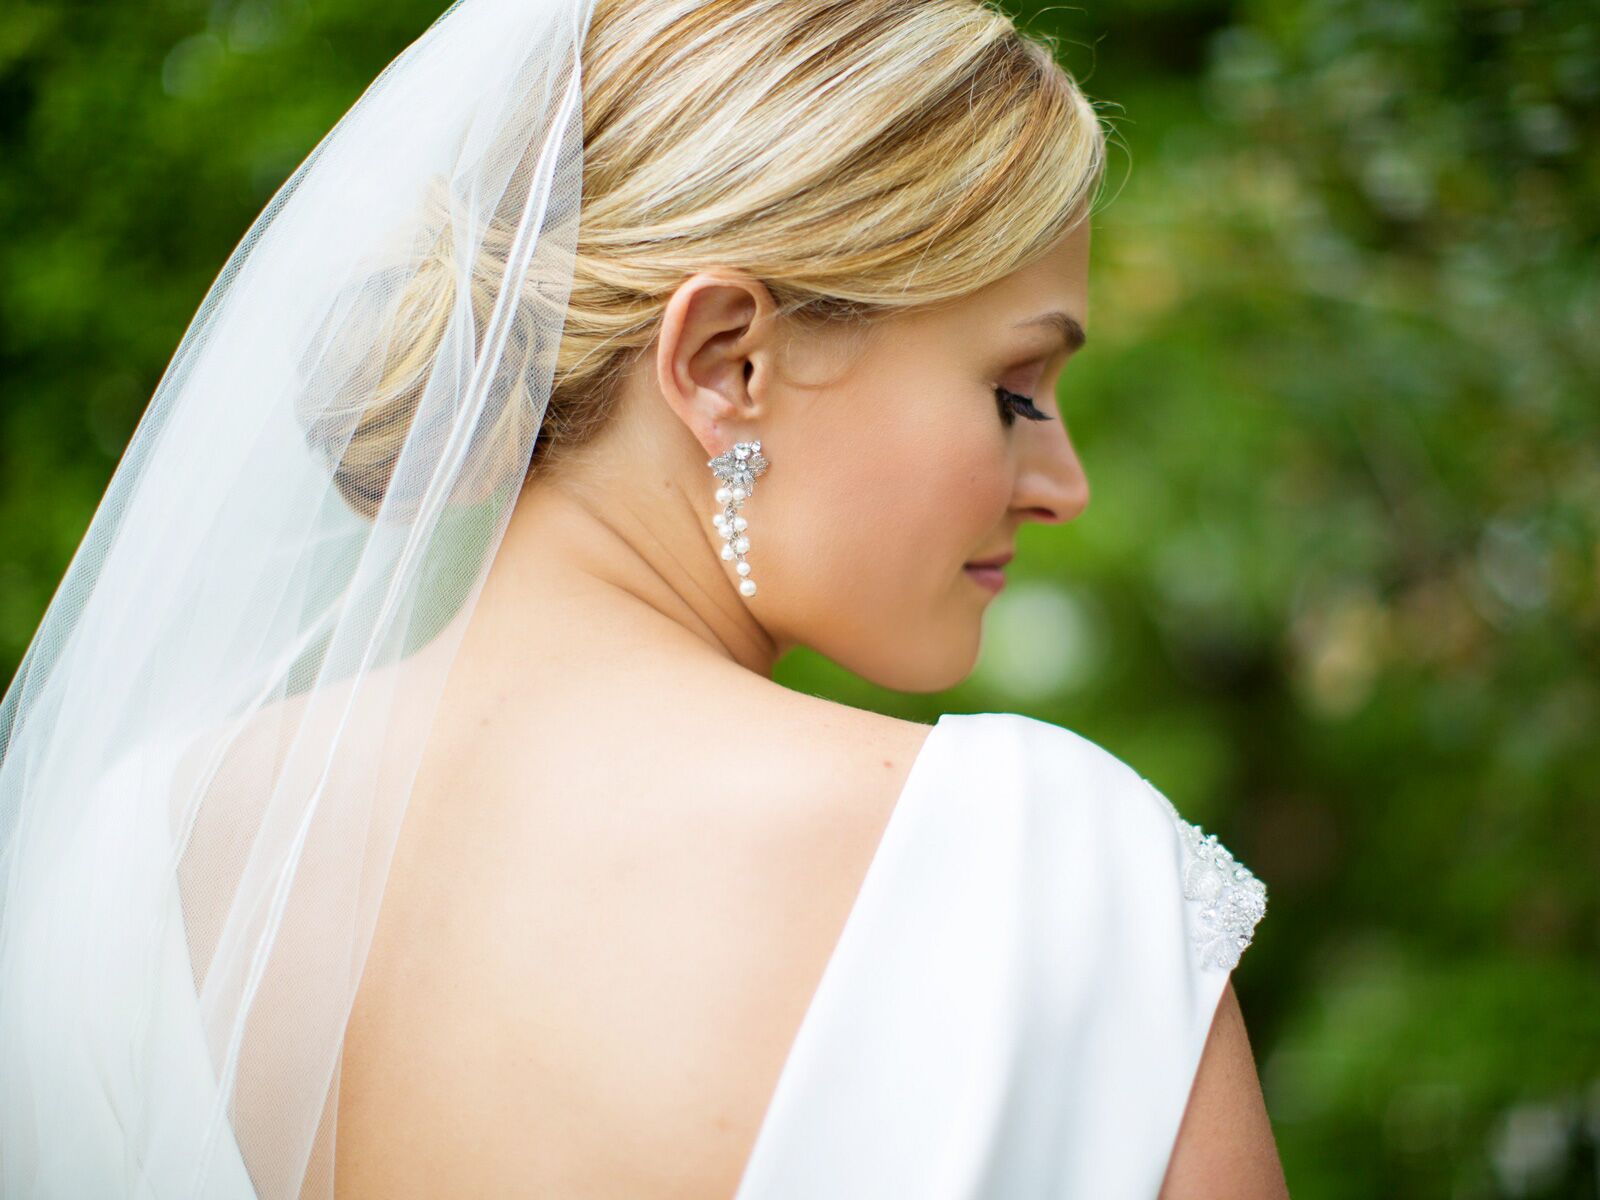 where to buy wedding veils online